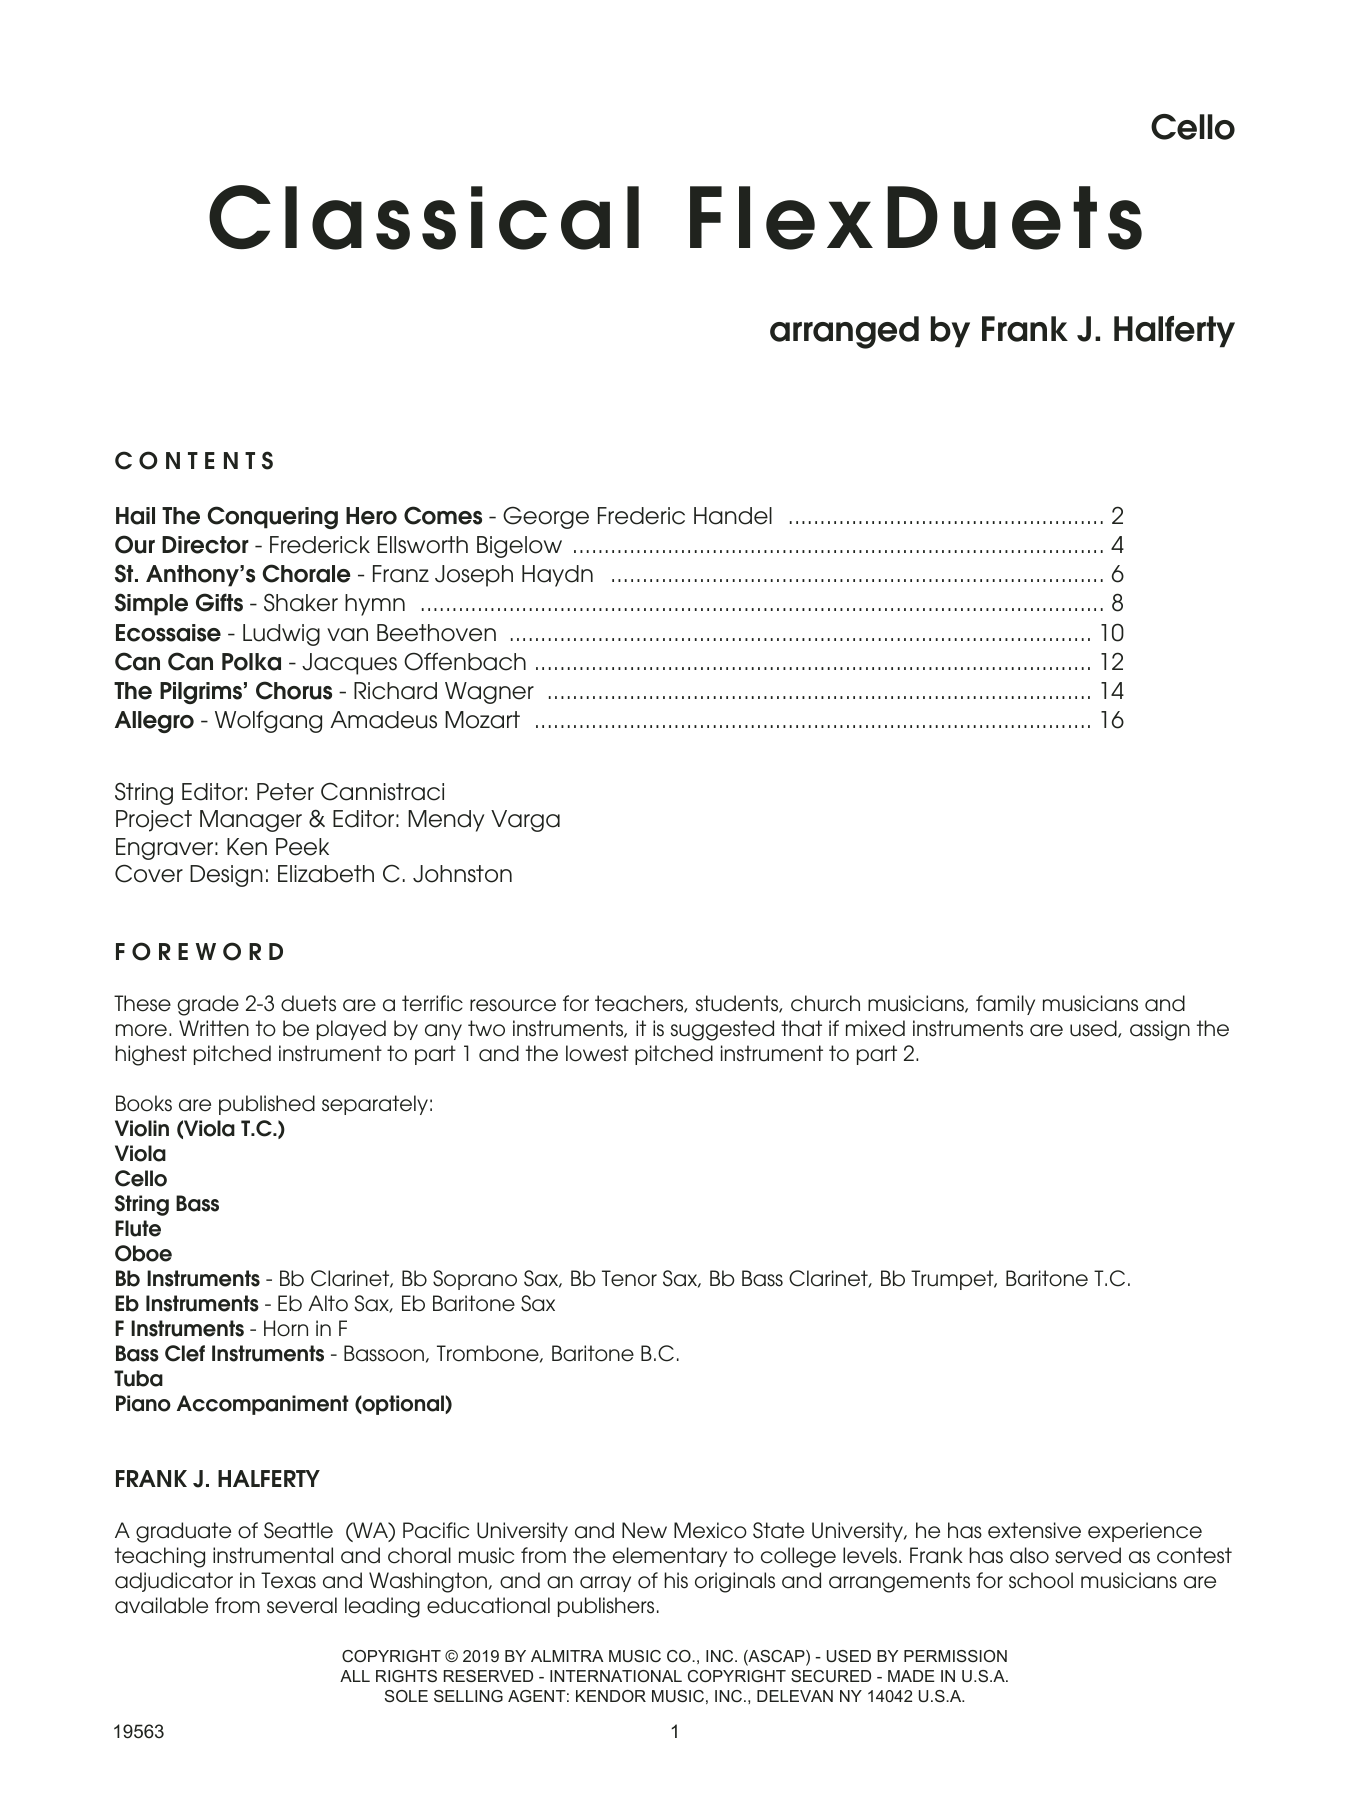 Download Frank J. Halferty Classical Flexduets - Cello Sheet Music